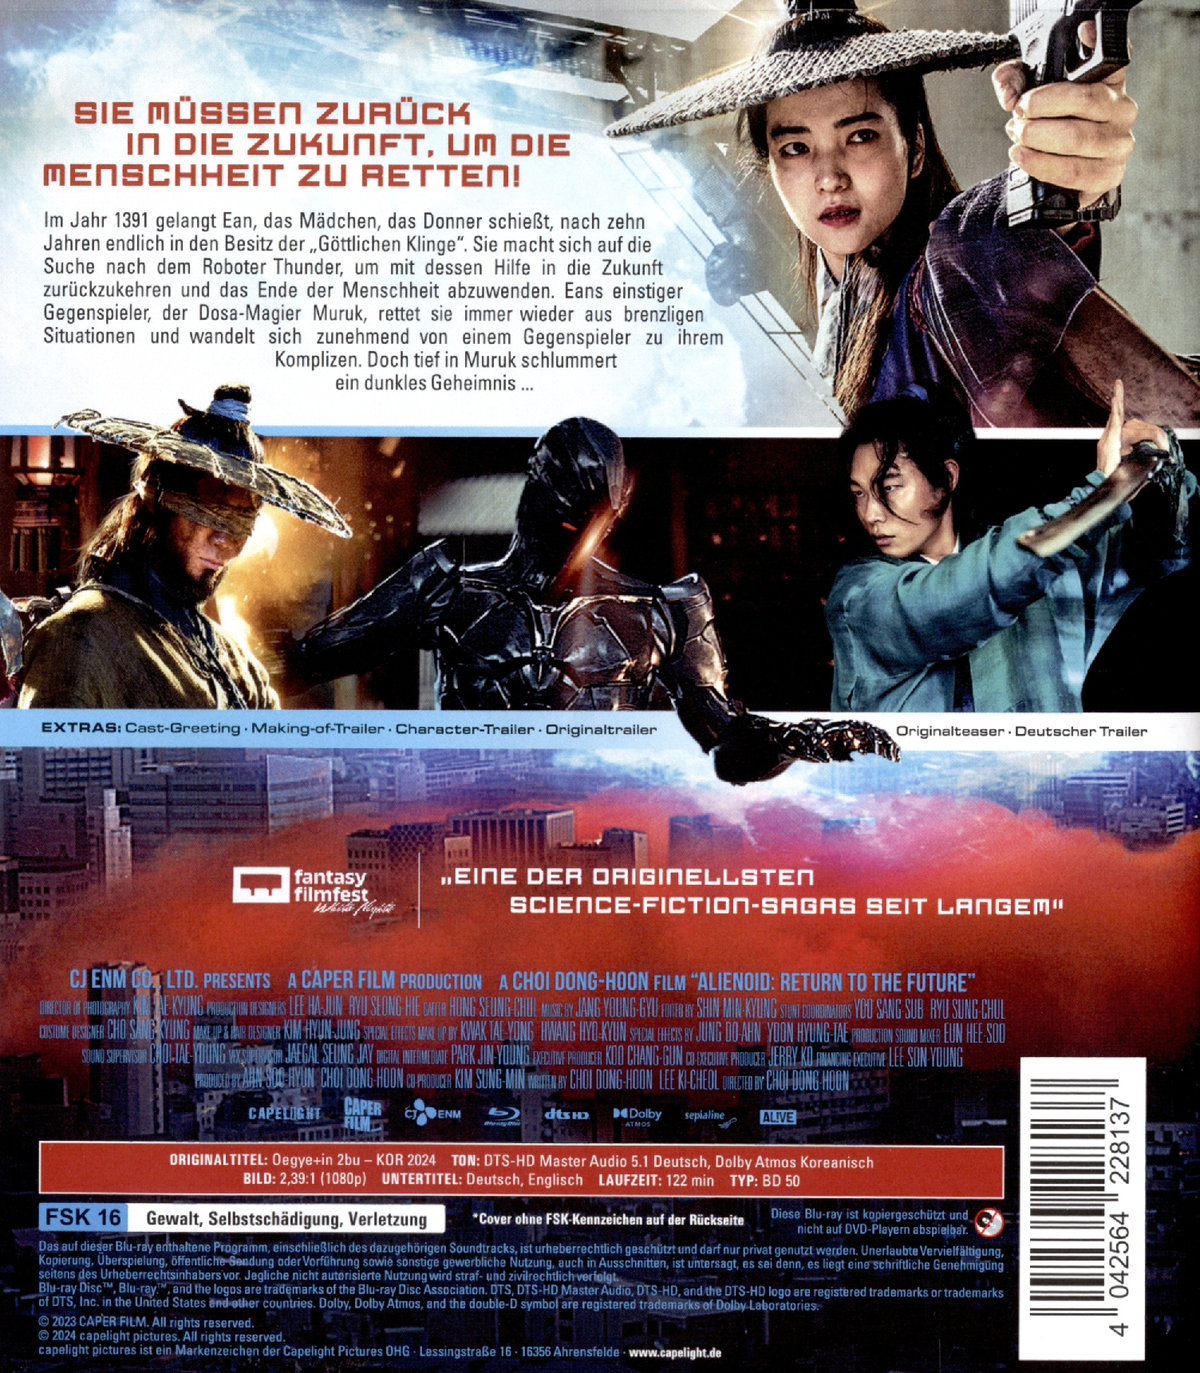 Alienoid 2: Return to the Future  (Blu-ray Disc)